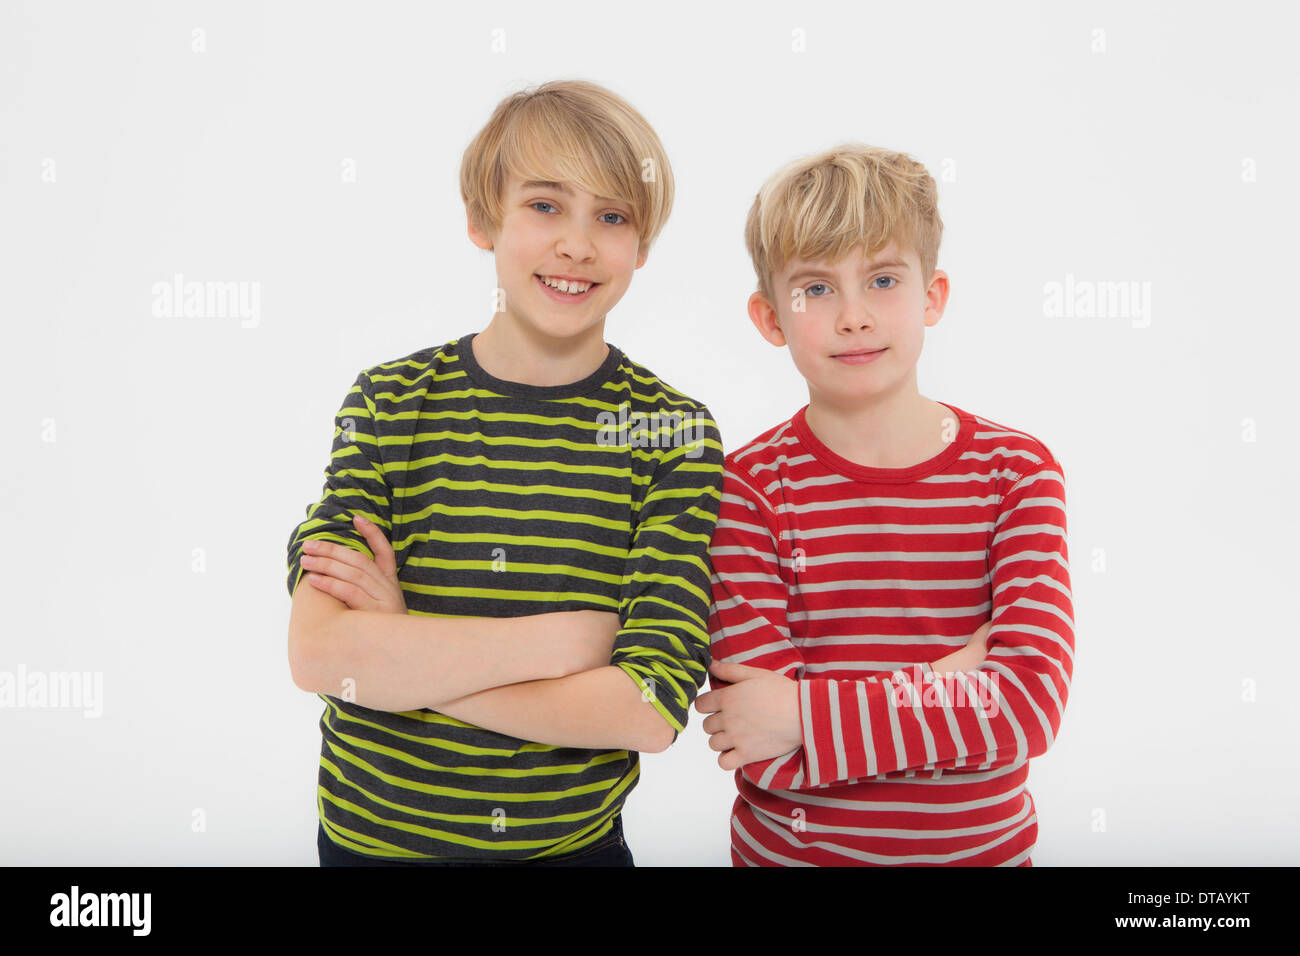 Portrait of boys against white background Stock Photo